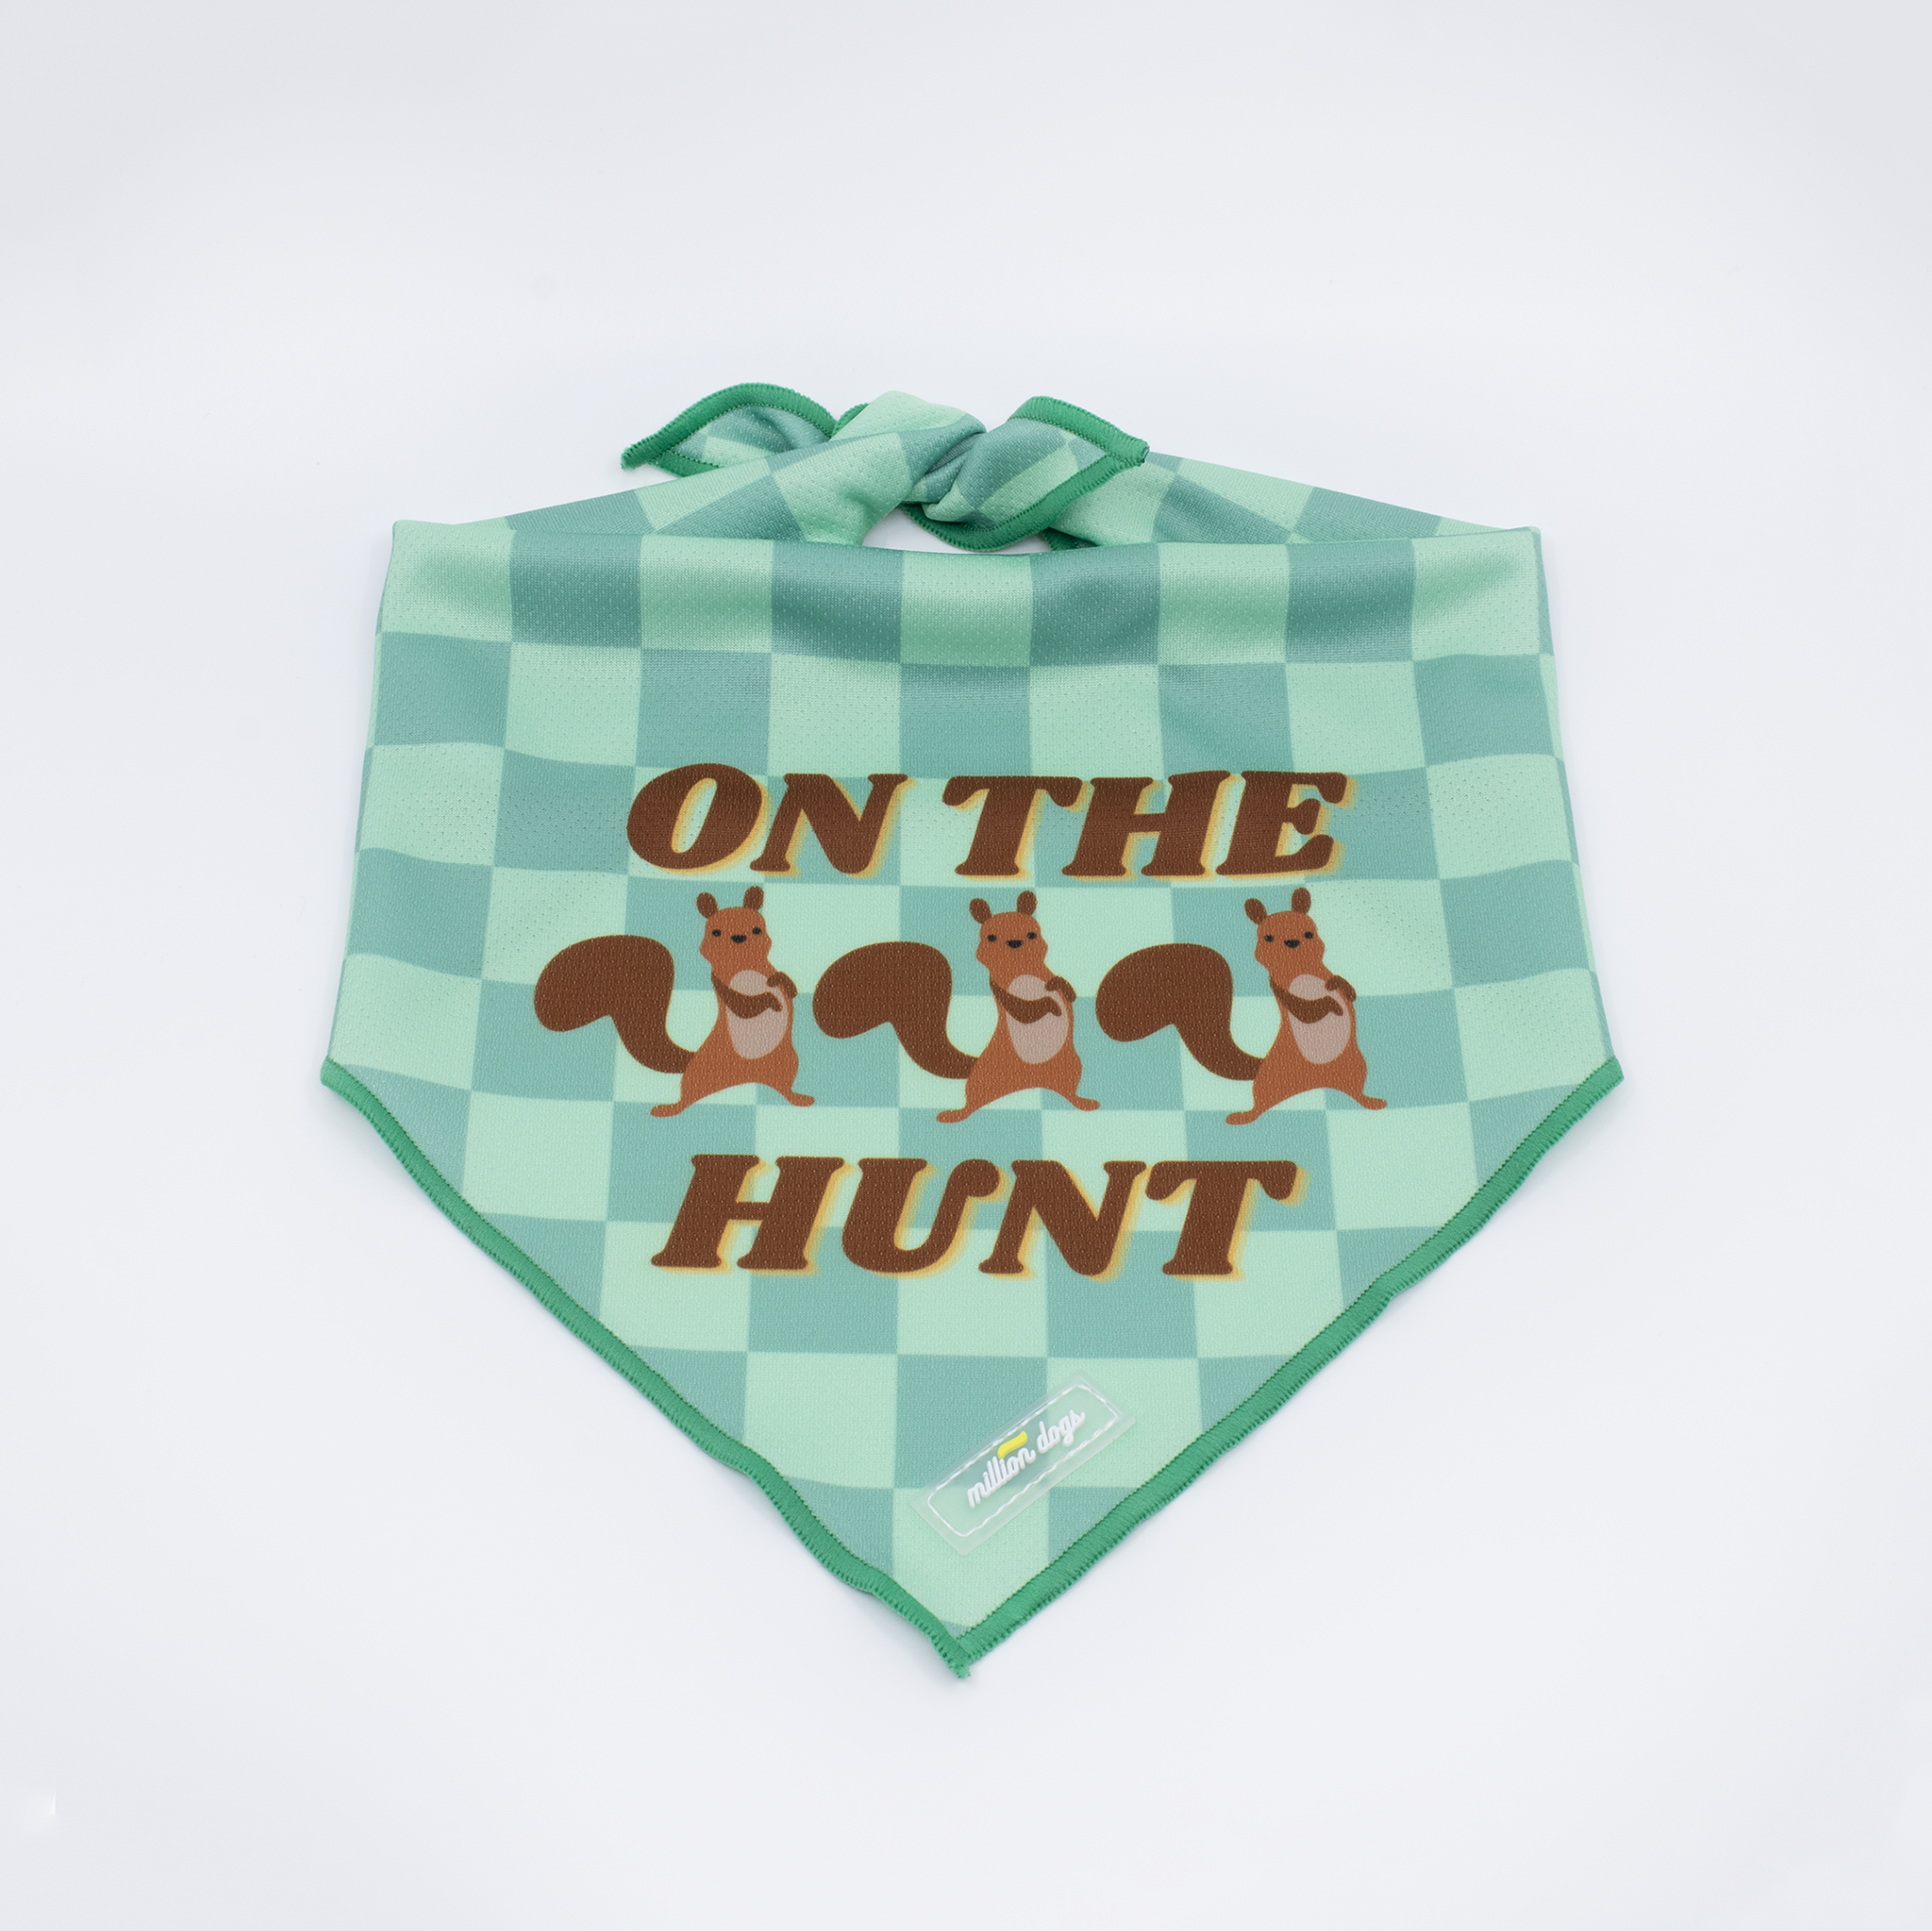 Cooling dog bandana - On the quarrel hunt by Million Dogs